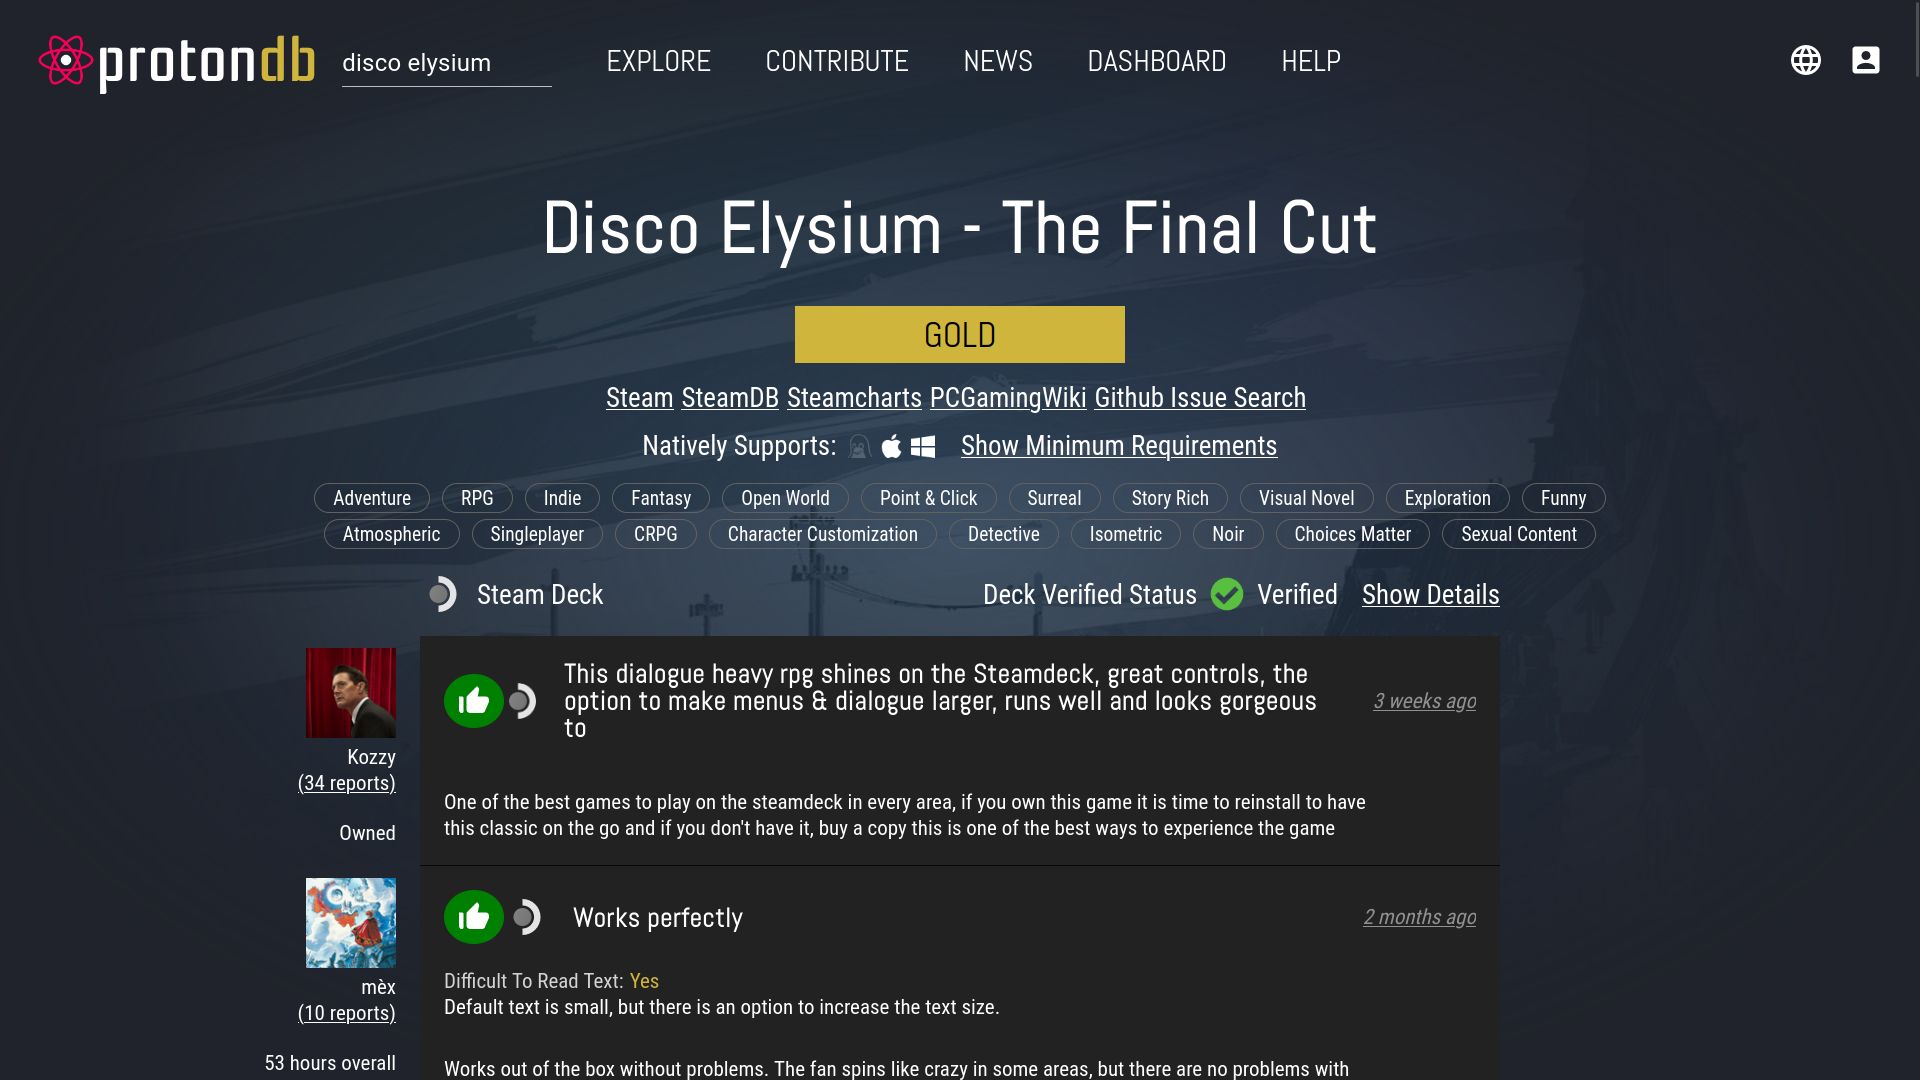 Disco Elysium page of ProtonDB website